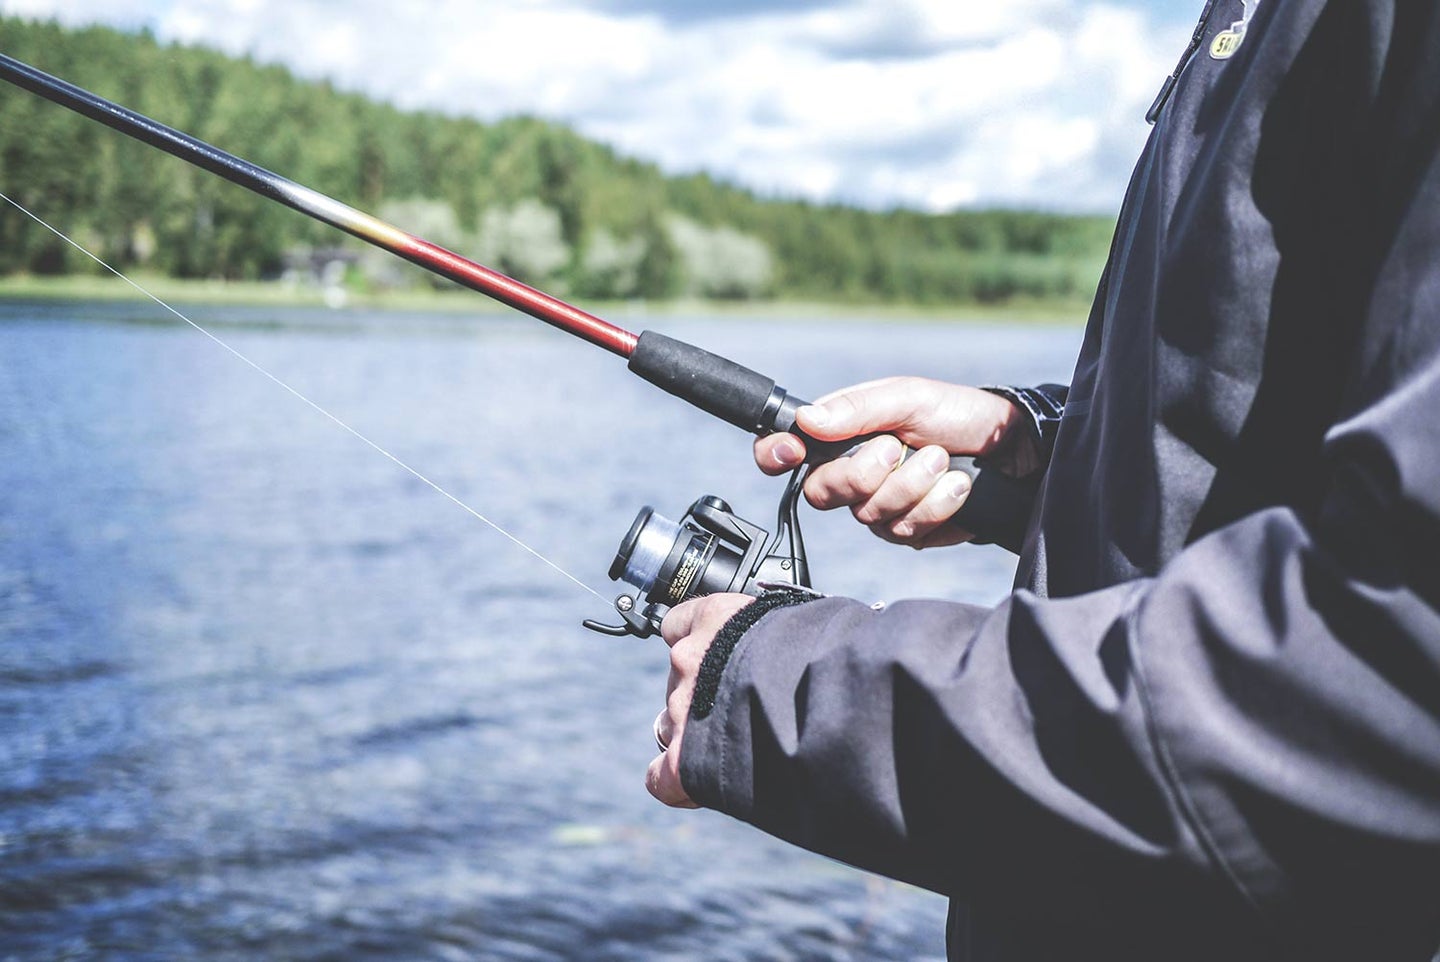 Angler with a fishing reel at a lake.